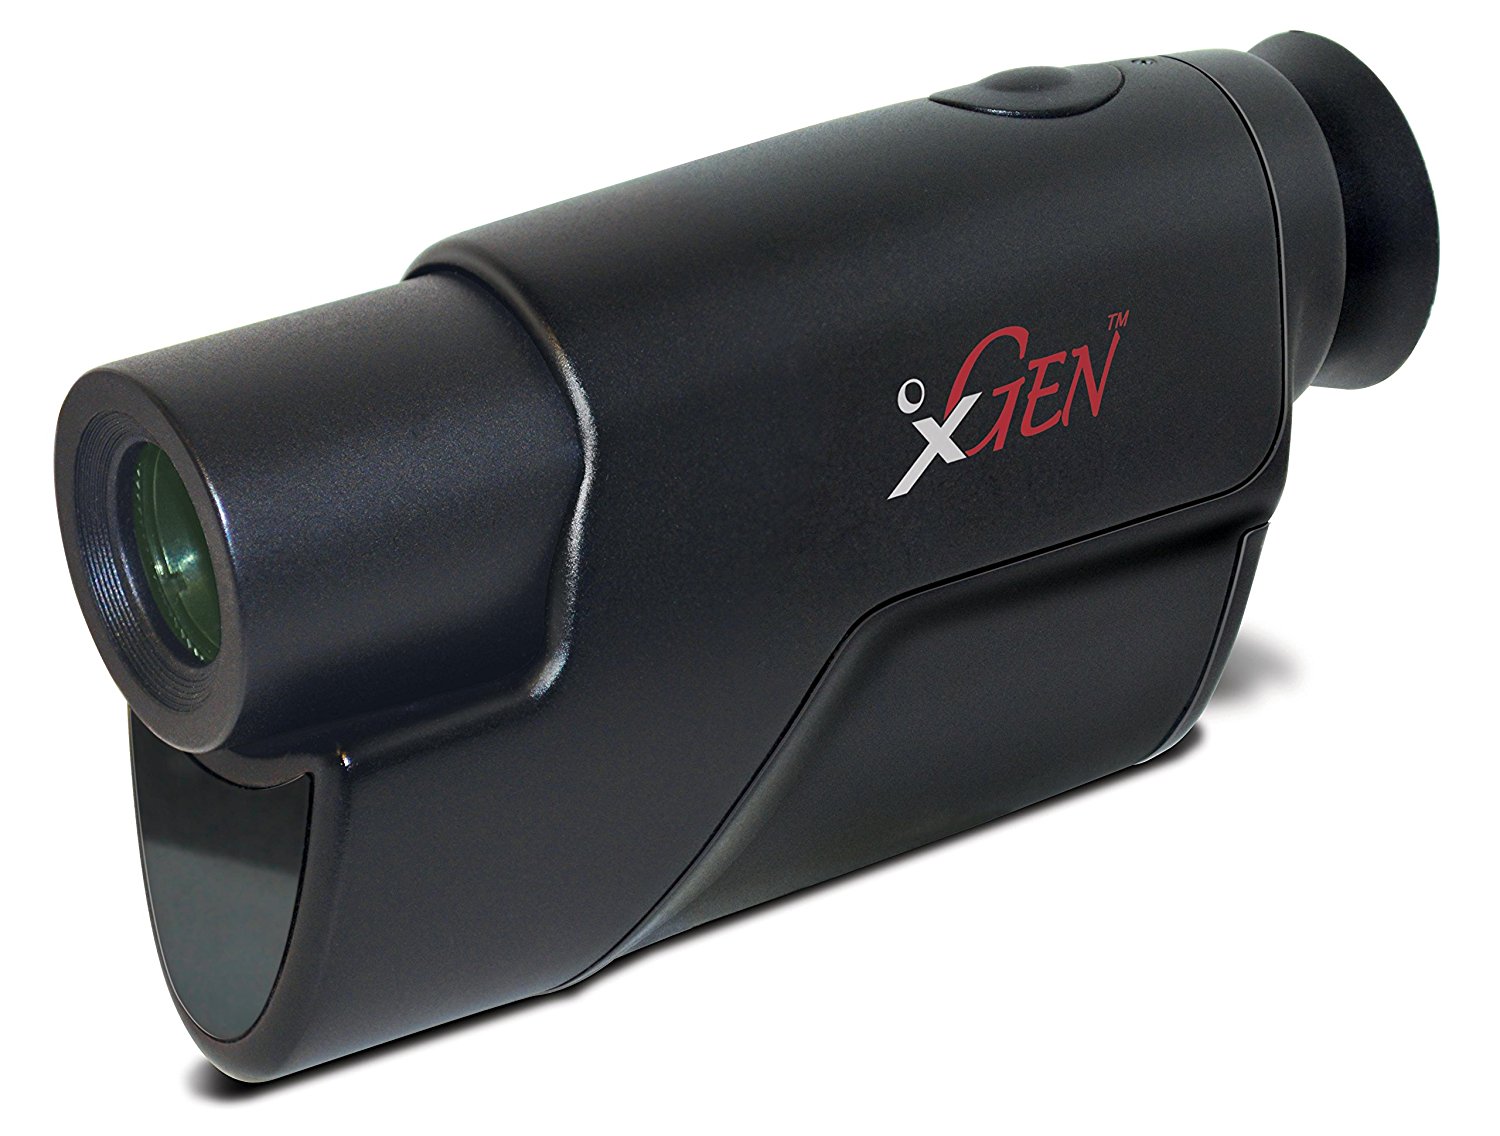 xgen night vision binoculars